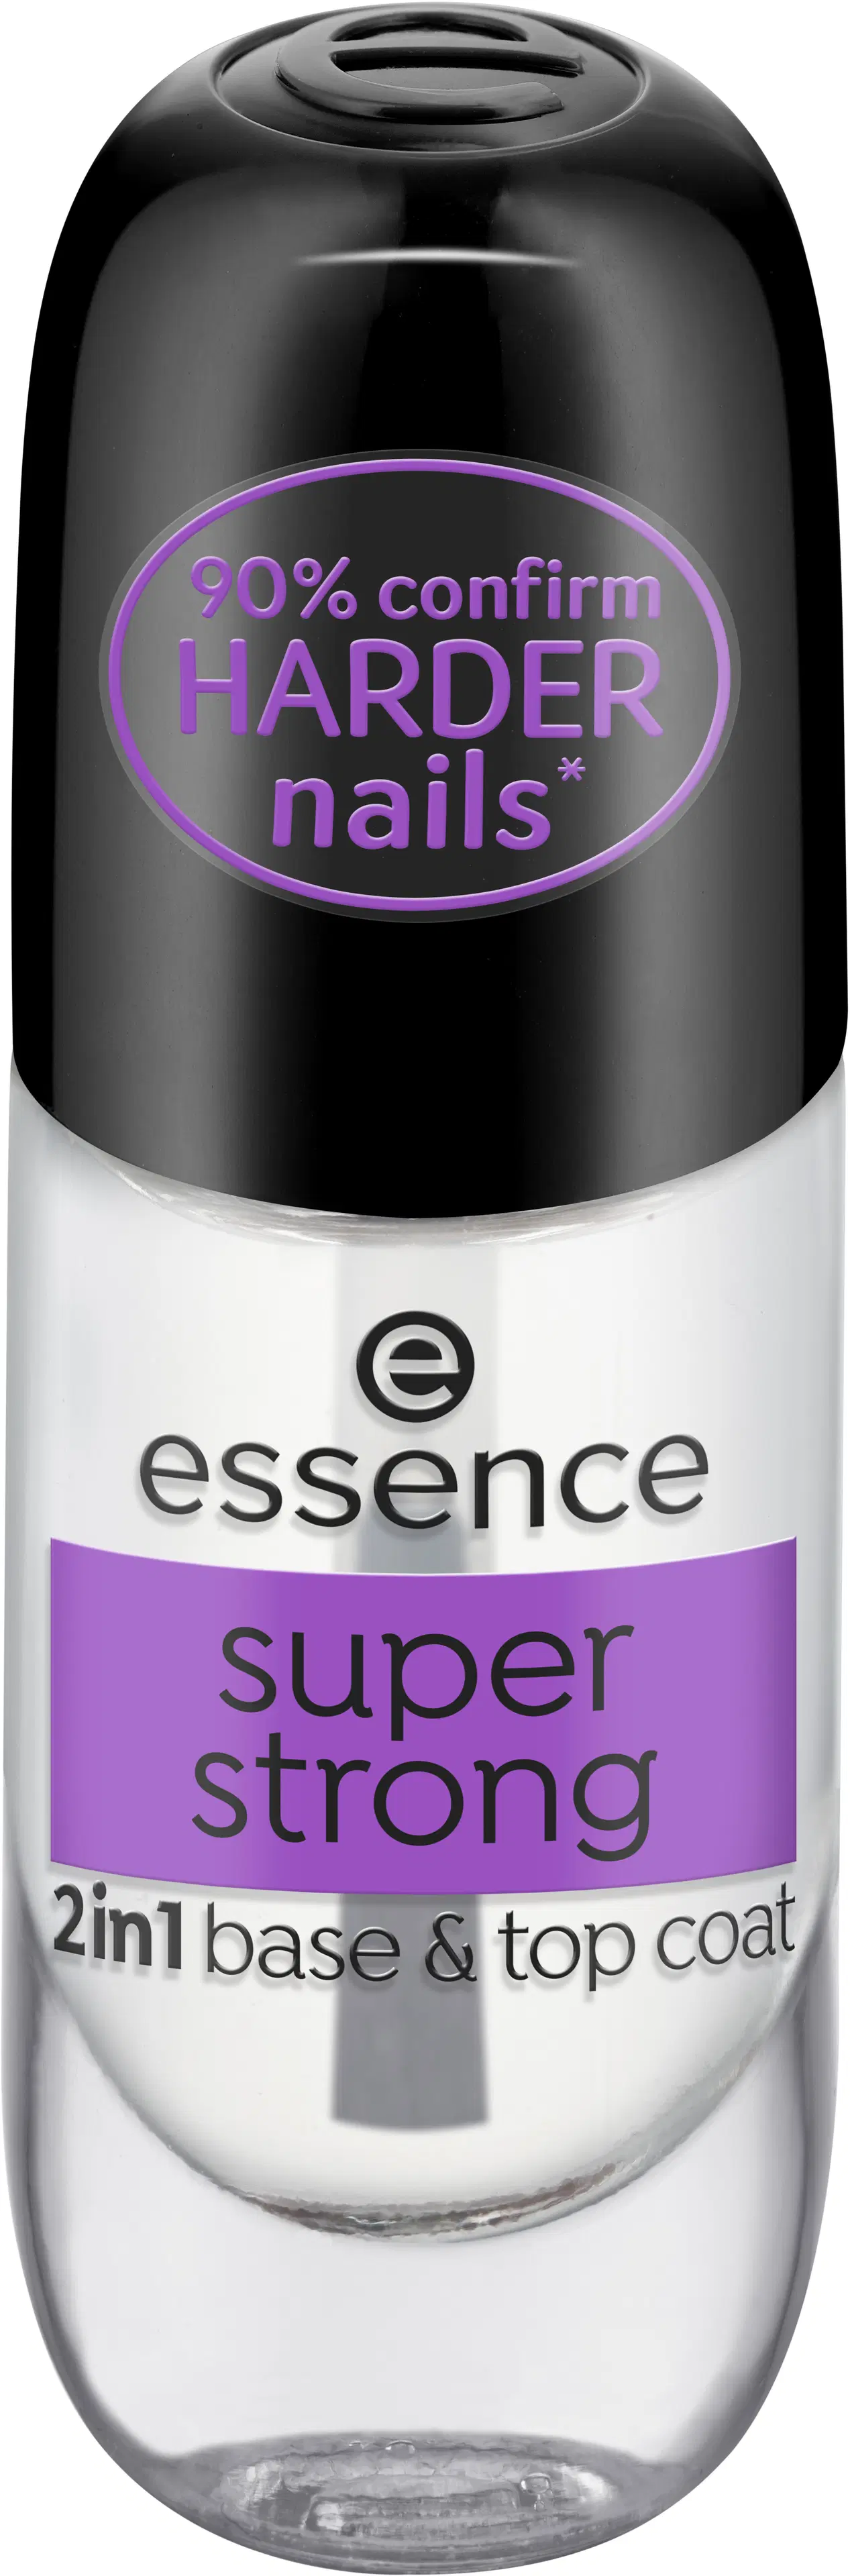 essence super strong 2in1 base & top coat alus- & päällyslakka 8 ml